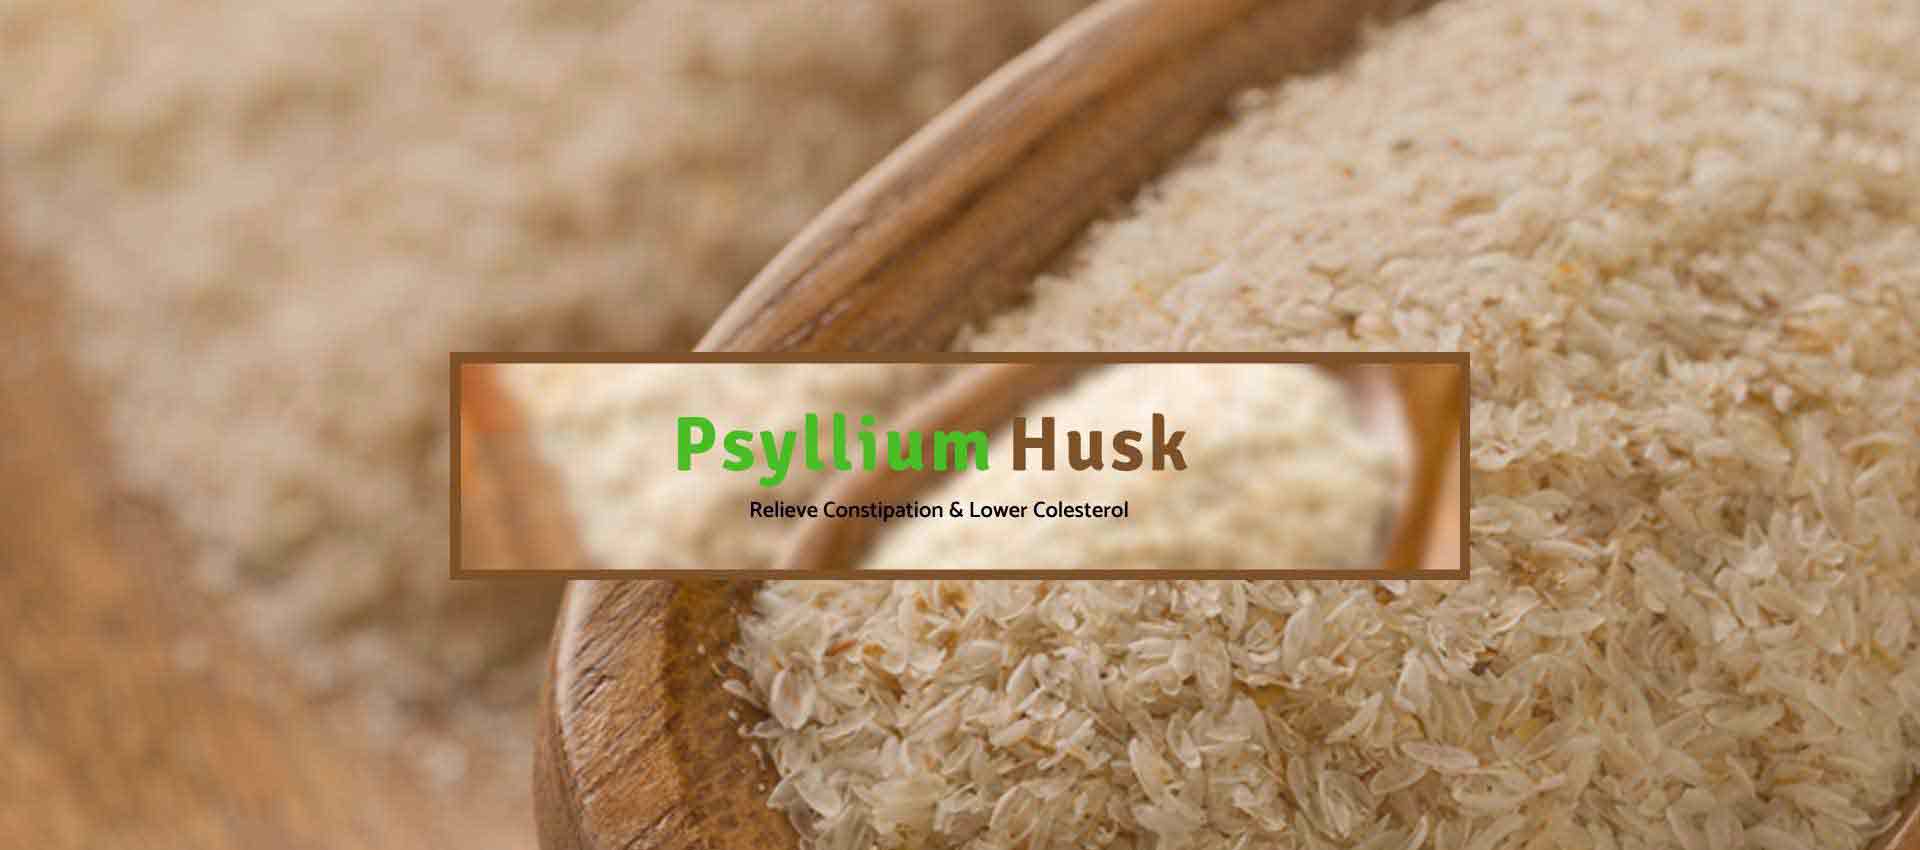 Psyllium Husk Manufacturers in Greece